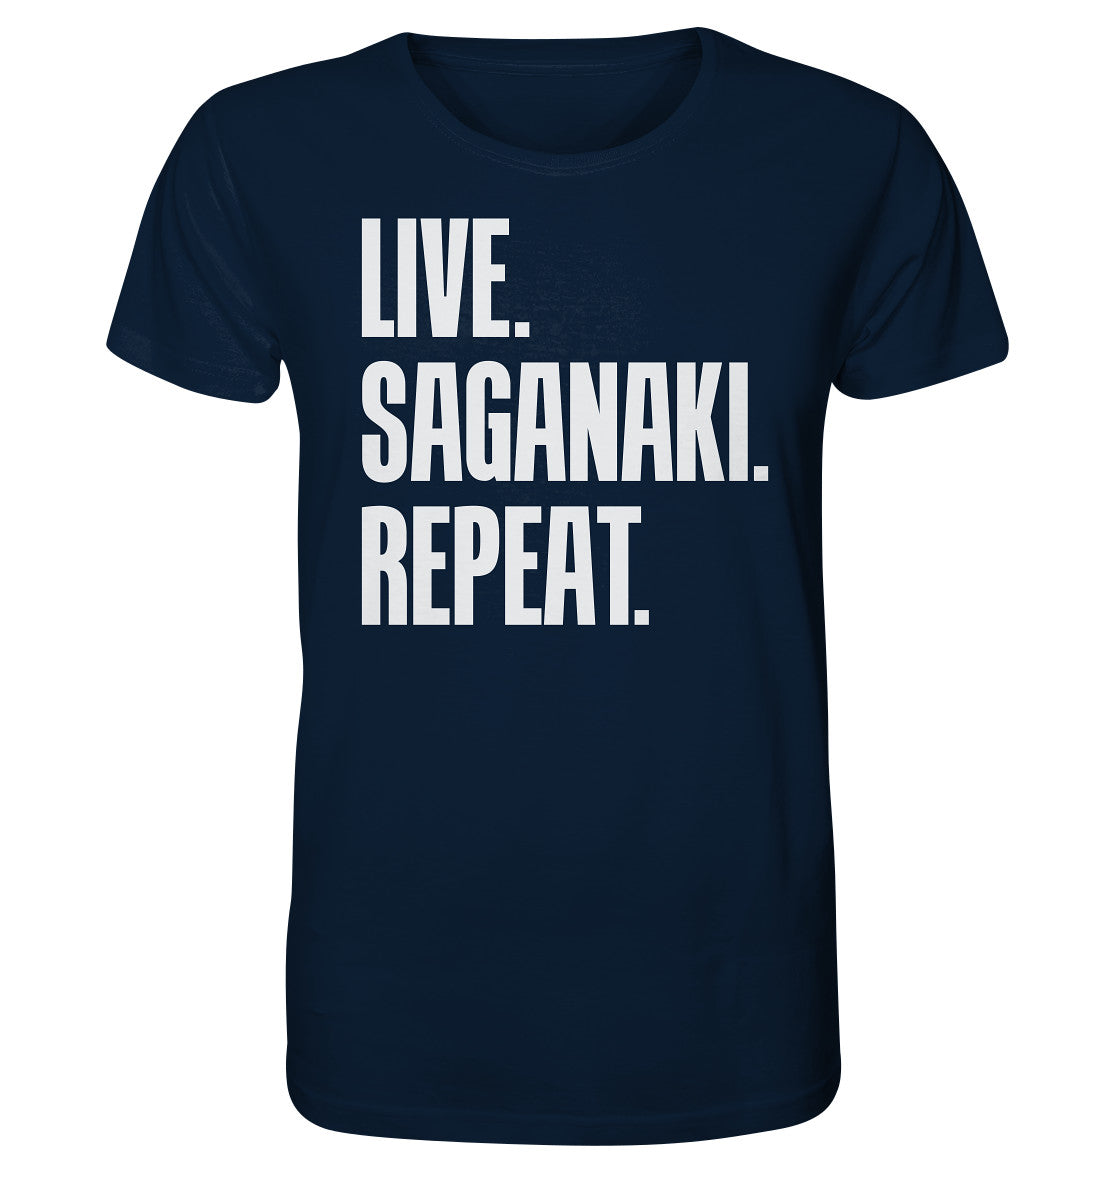 LIVE. SAGANAKI. REPEAT. -Organic shirt